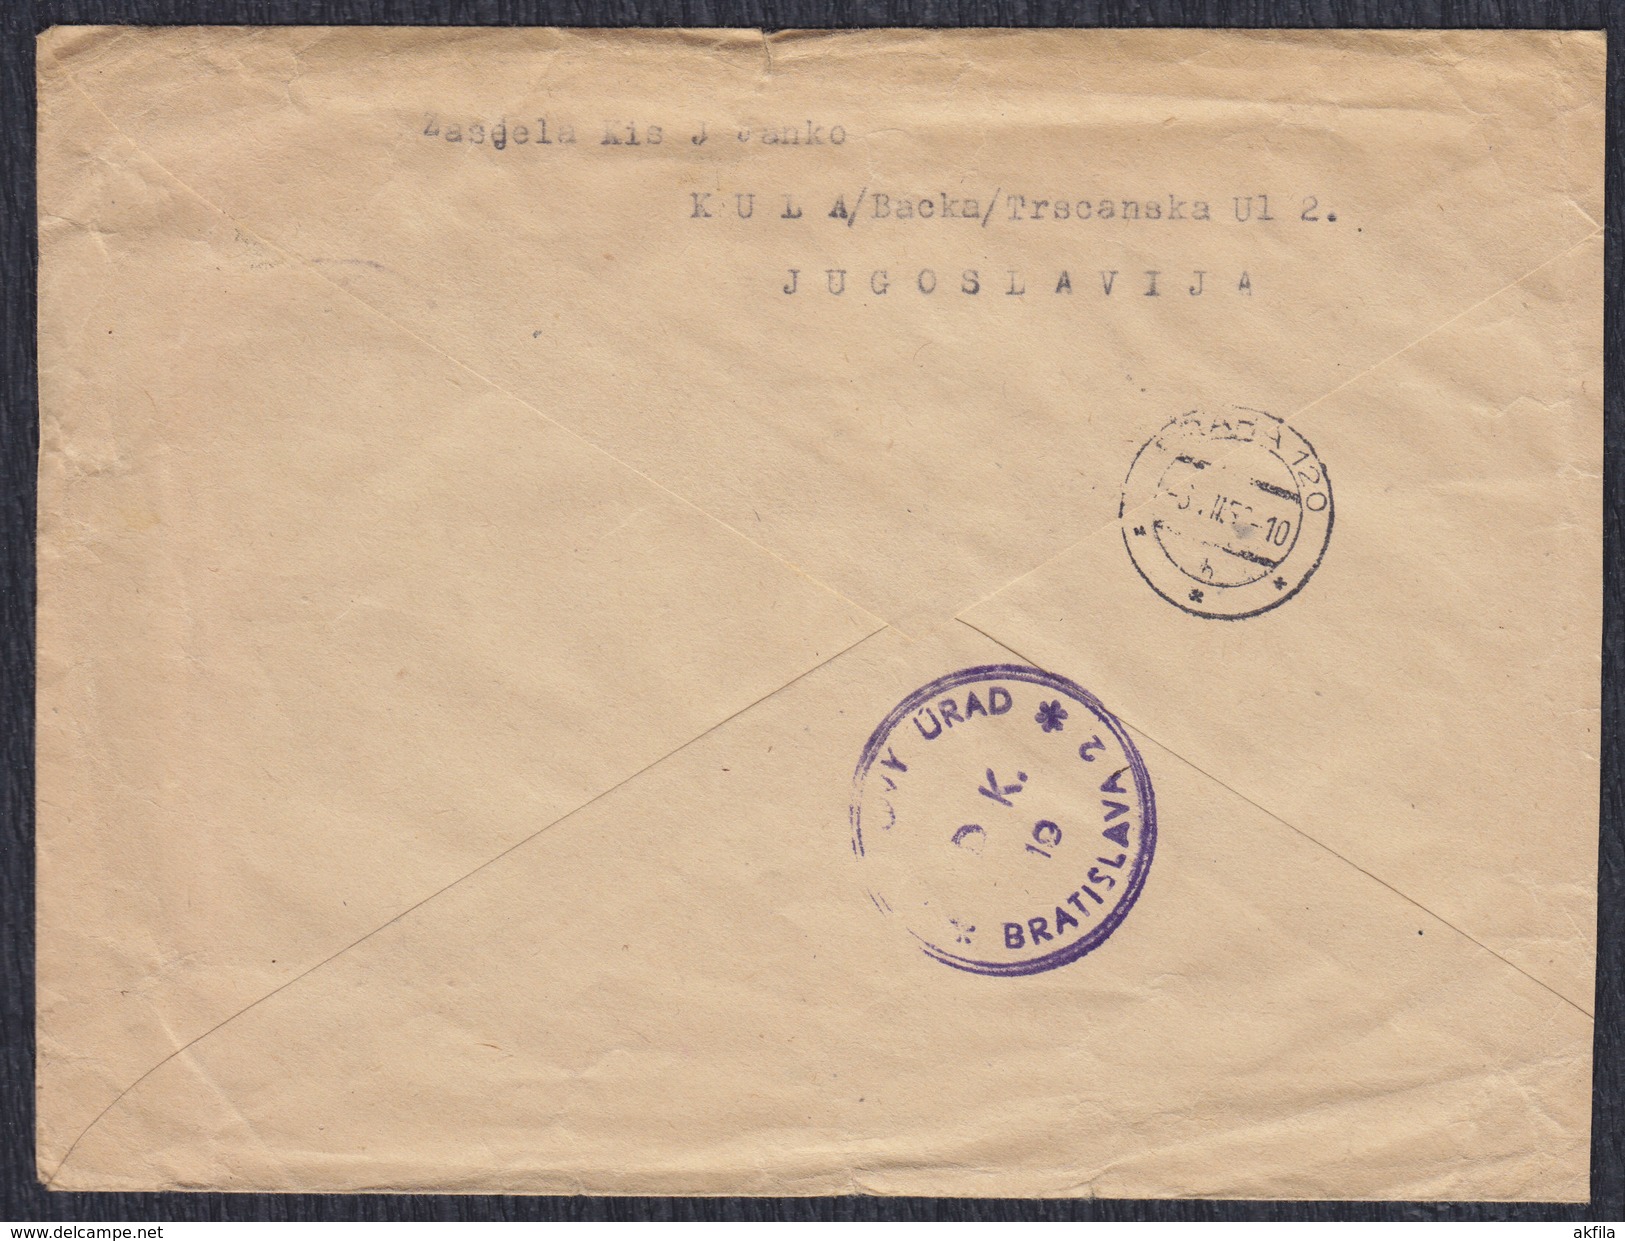 Yugoslavia 1950 Marshal Tito, Letter Sent From Kula To Bratislava - Covers & Documents